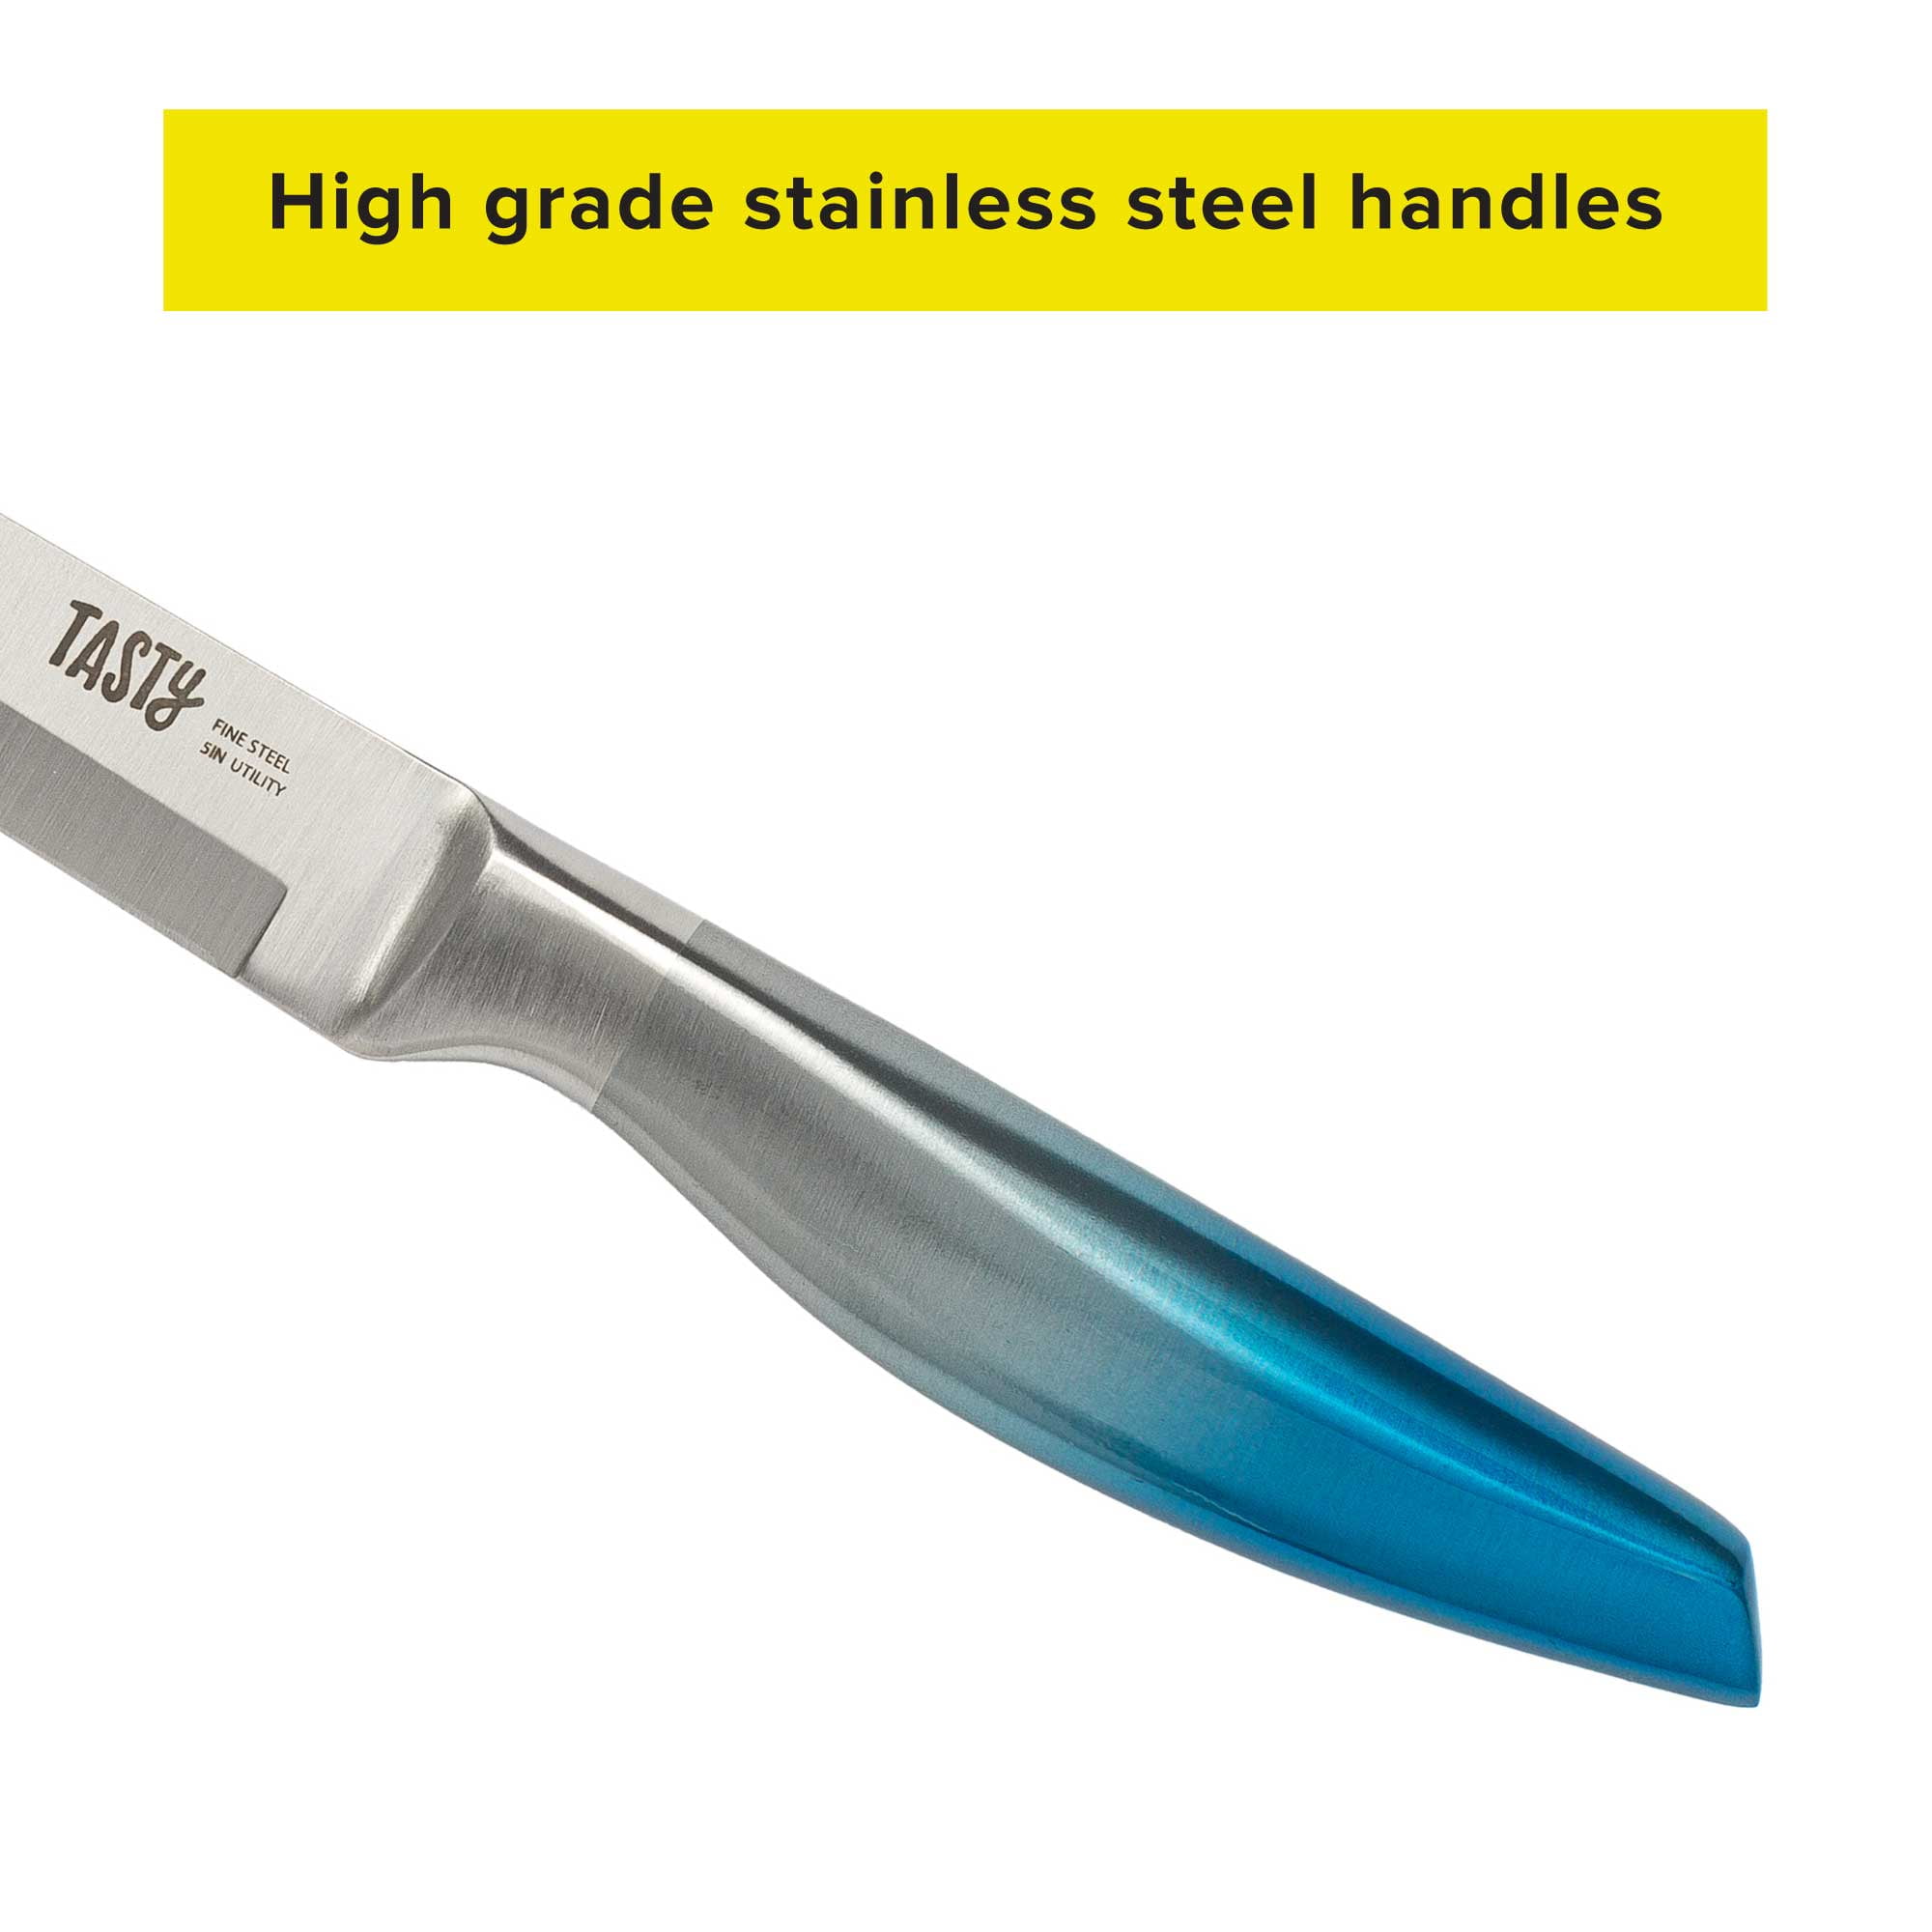 Tasty Stainless Steel Heavy Duty Kitchen Shears, Royal Blue, 2